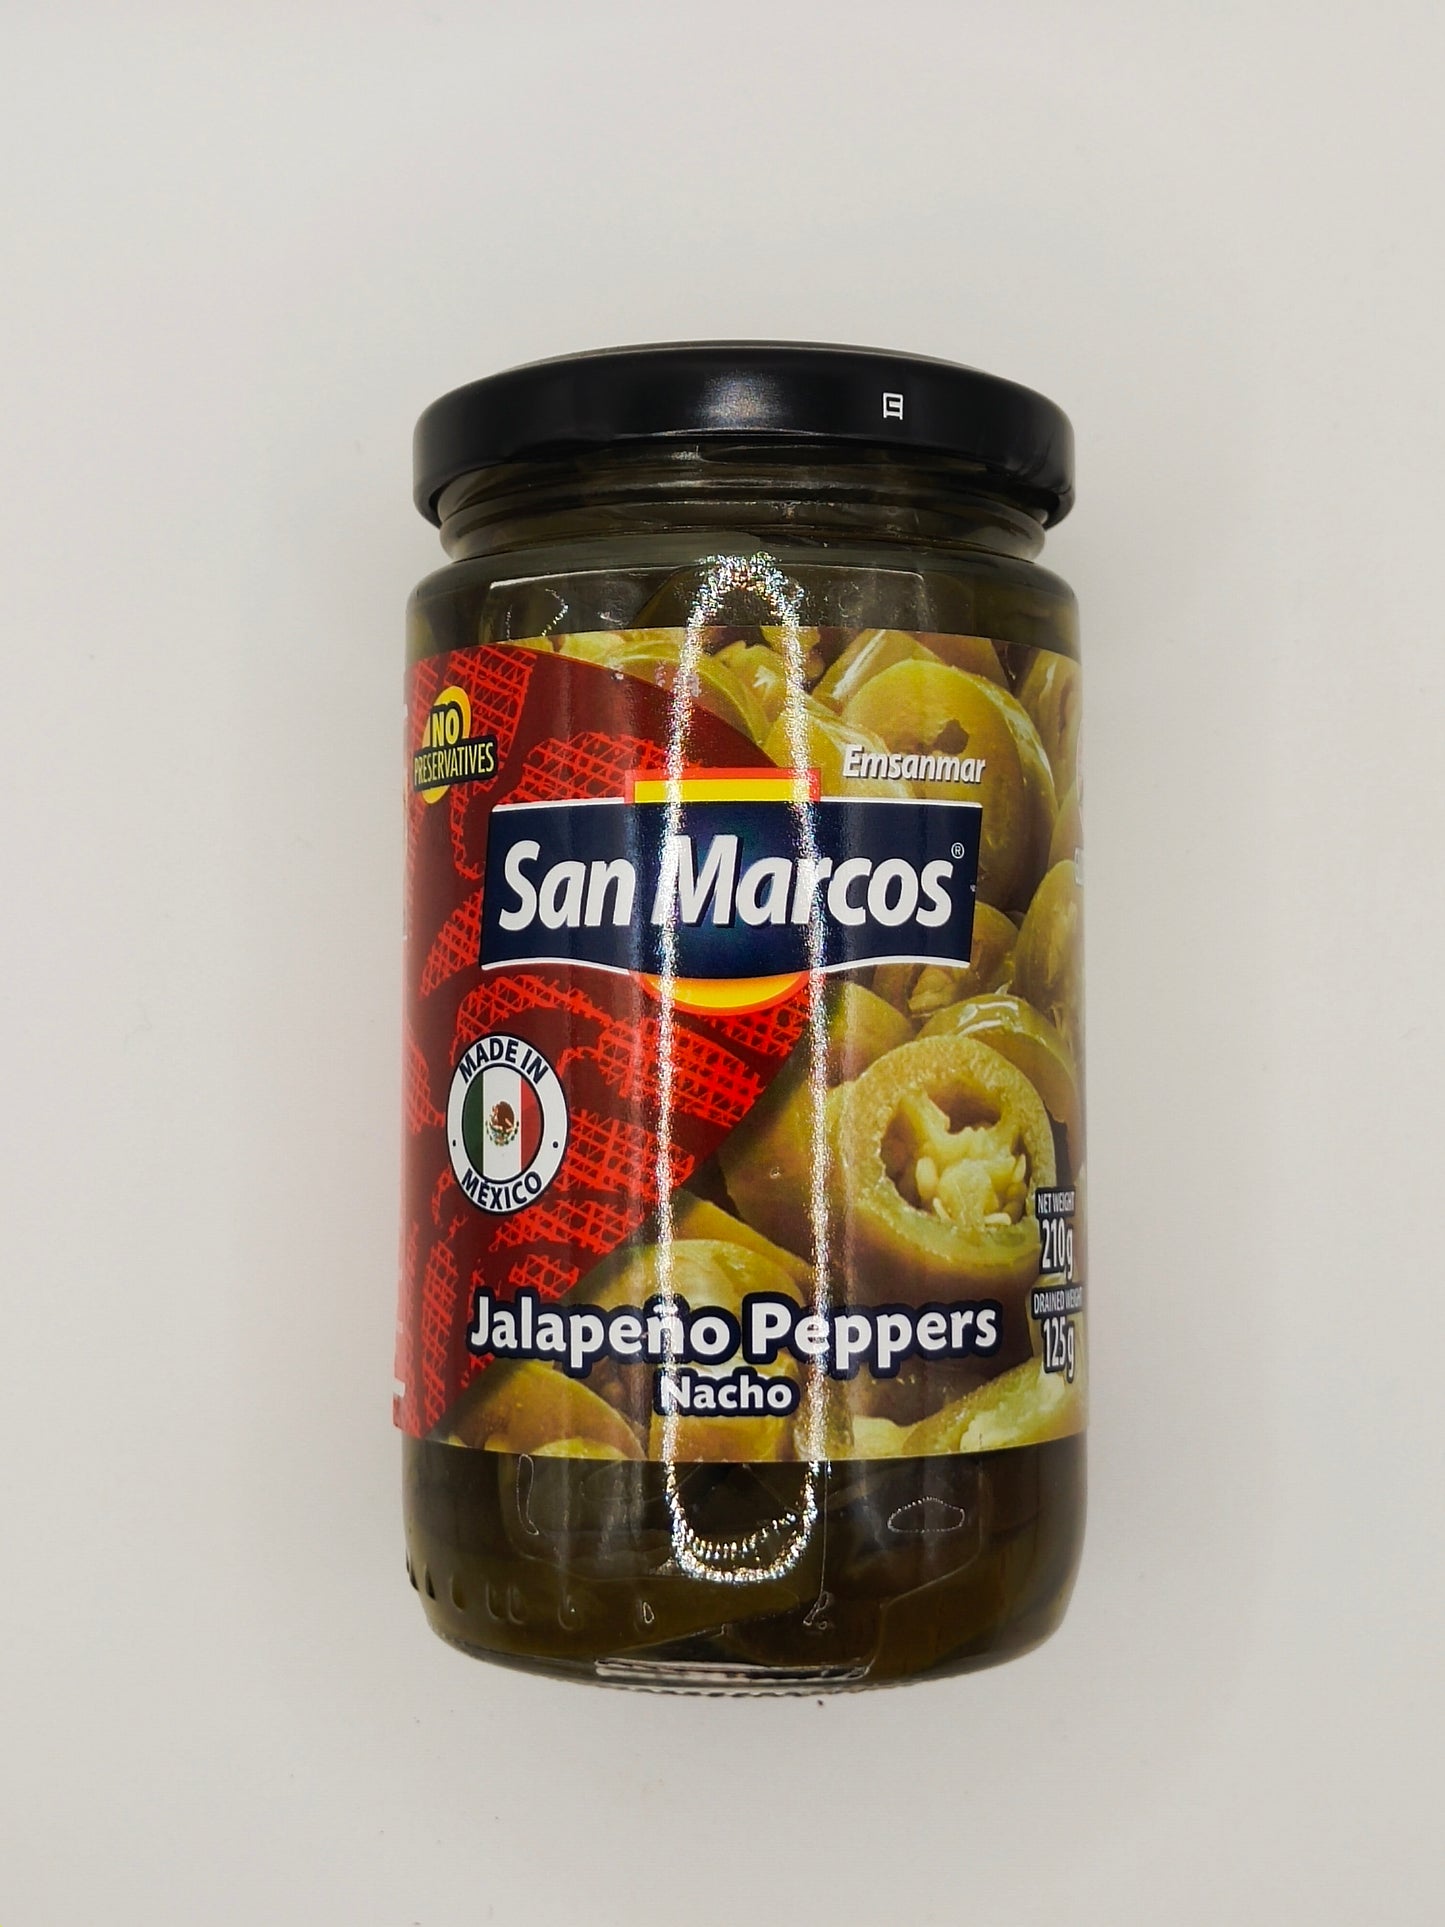 San Marcos - Jalapeno Peppers Nacho